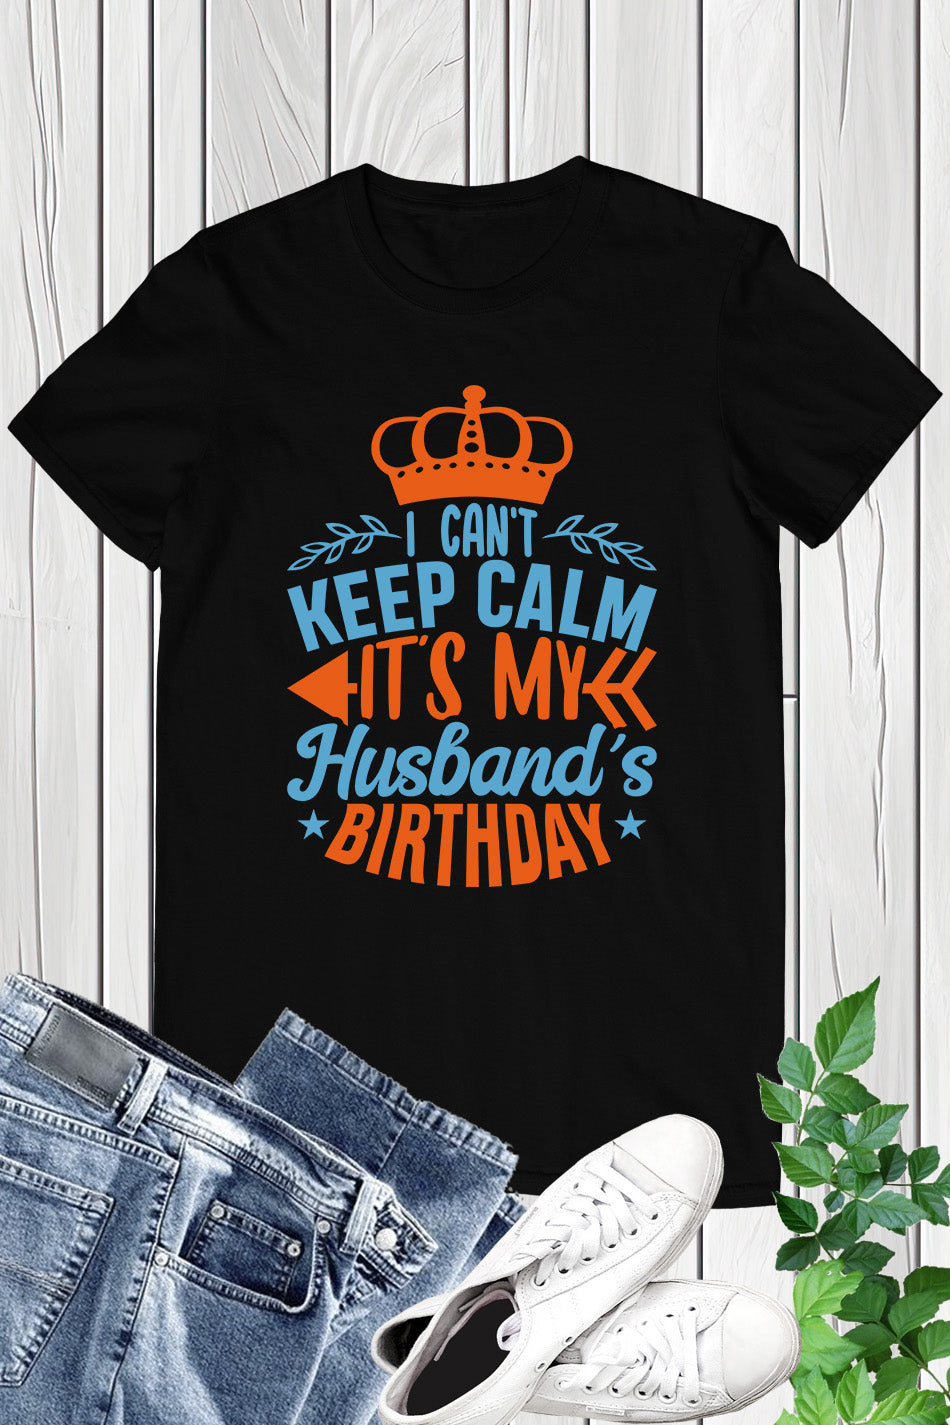 I Can't Keep Calm It's My husband's Birthday Shirt